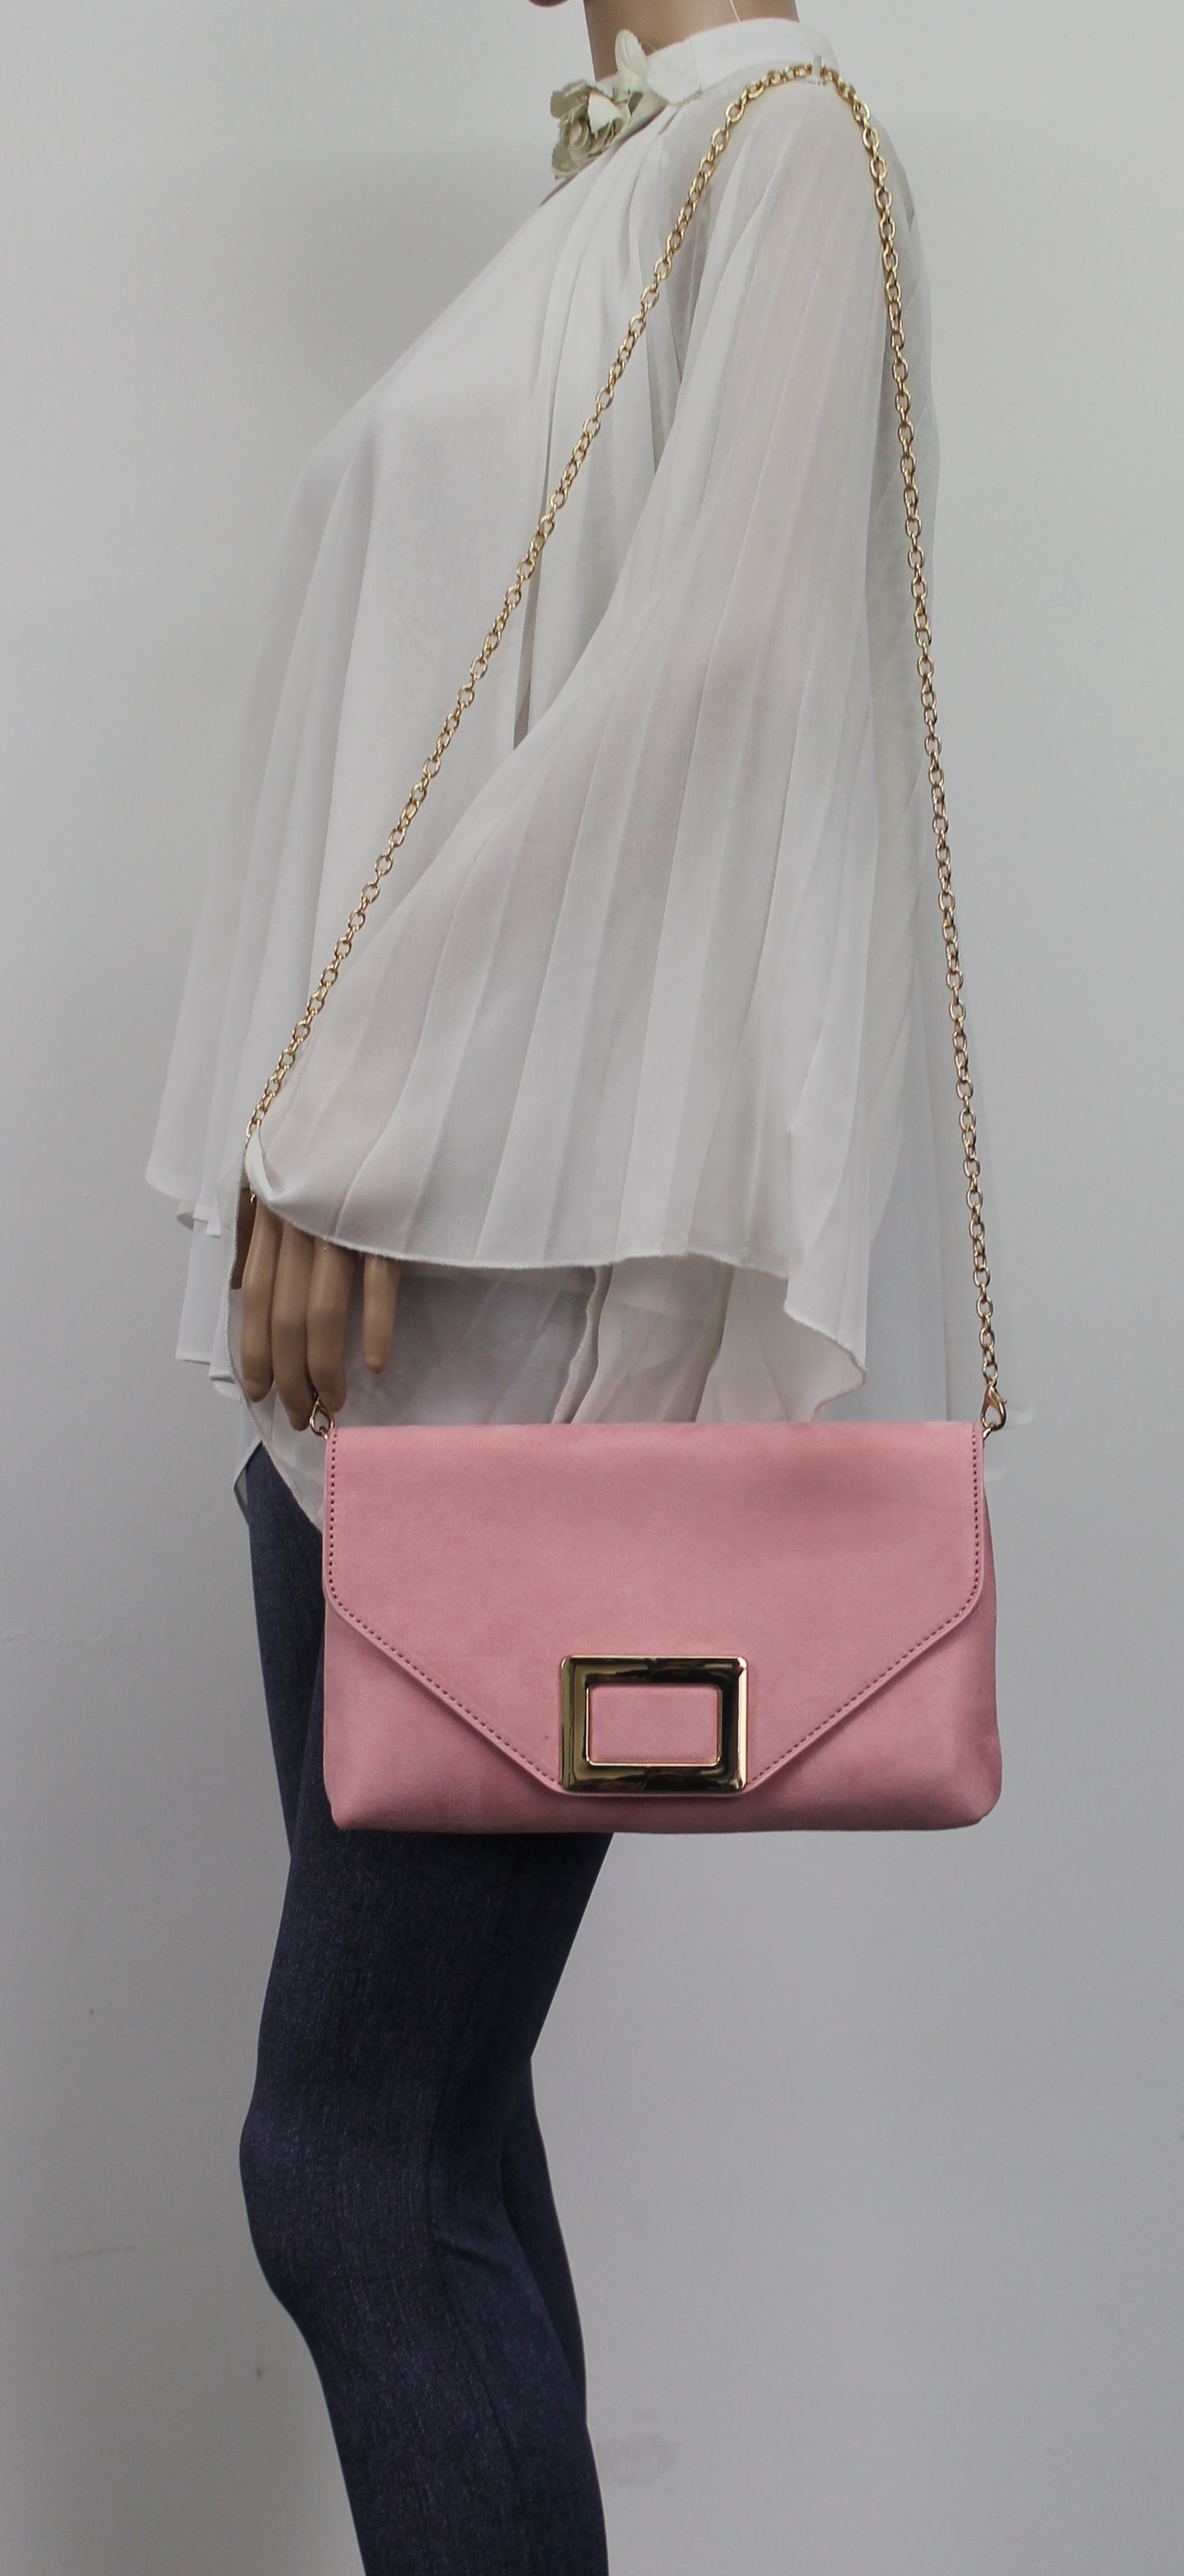 SWANKYSWANS Georgia Clutch Bag Pink Cute Cheap Clutch Bag For Weddings School and Work